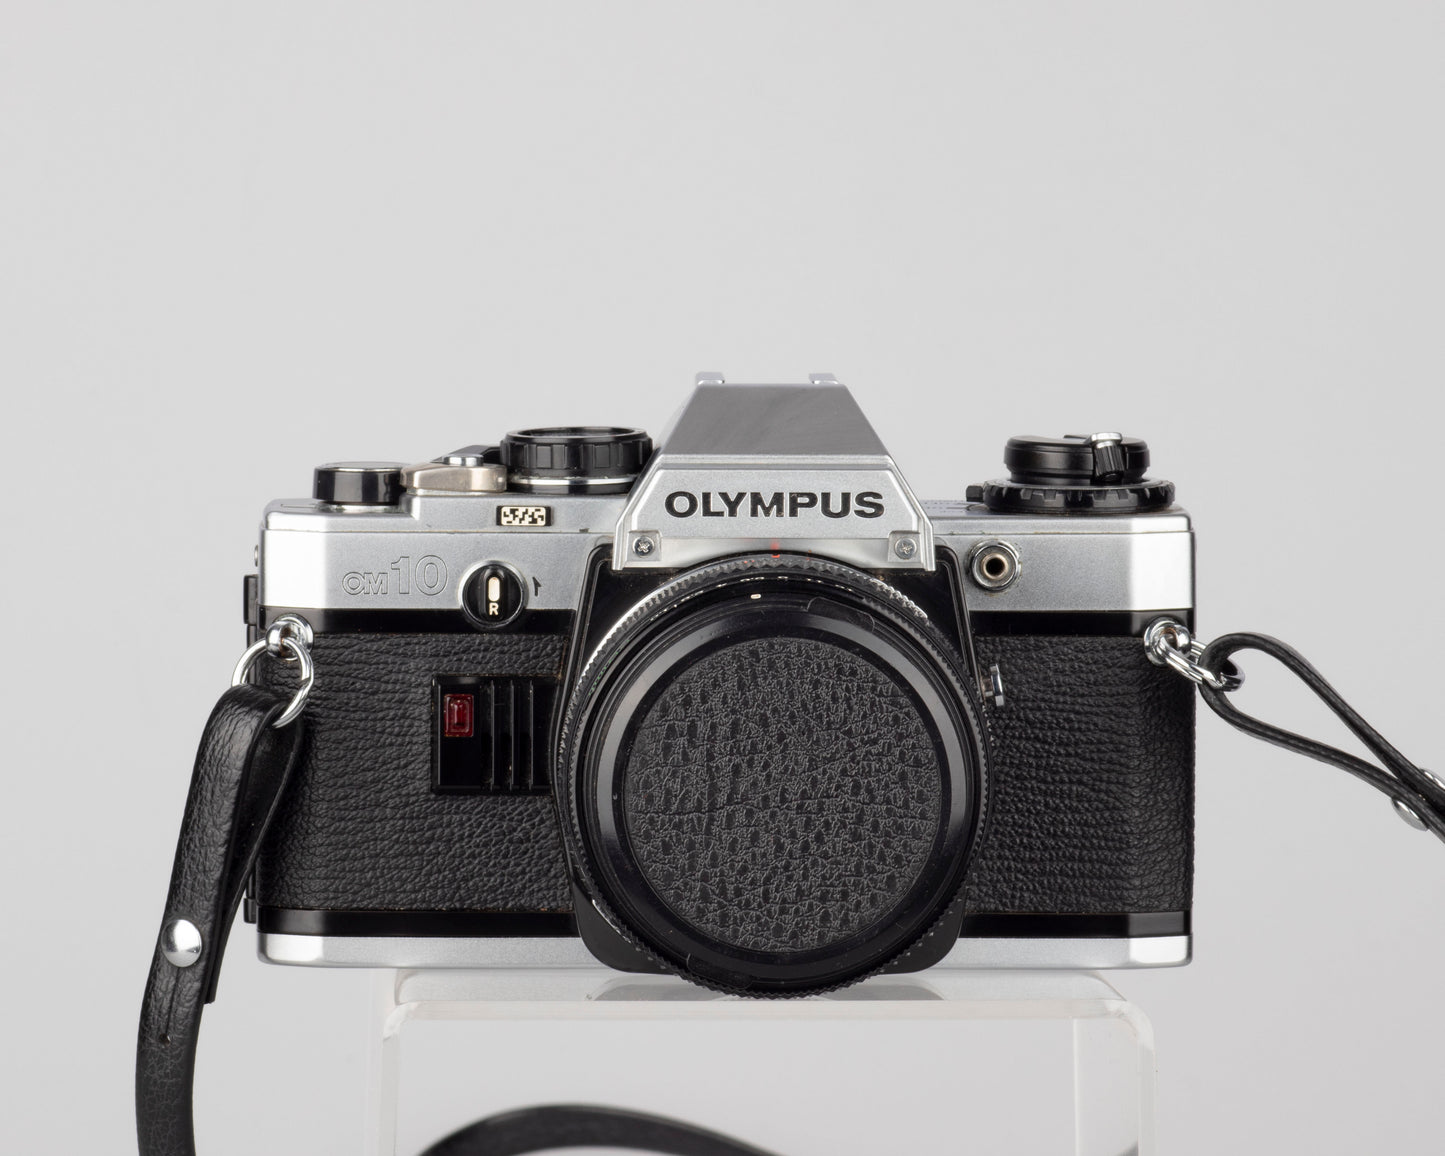 Olympus OM-10 35mm film SLR w/ Zuiko 50mm f1.8 lens (serial 2623408)